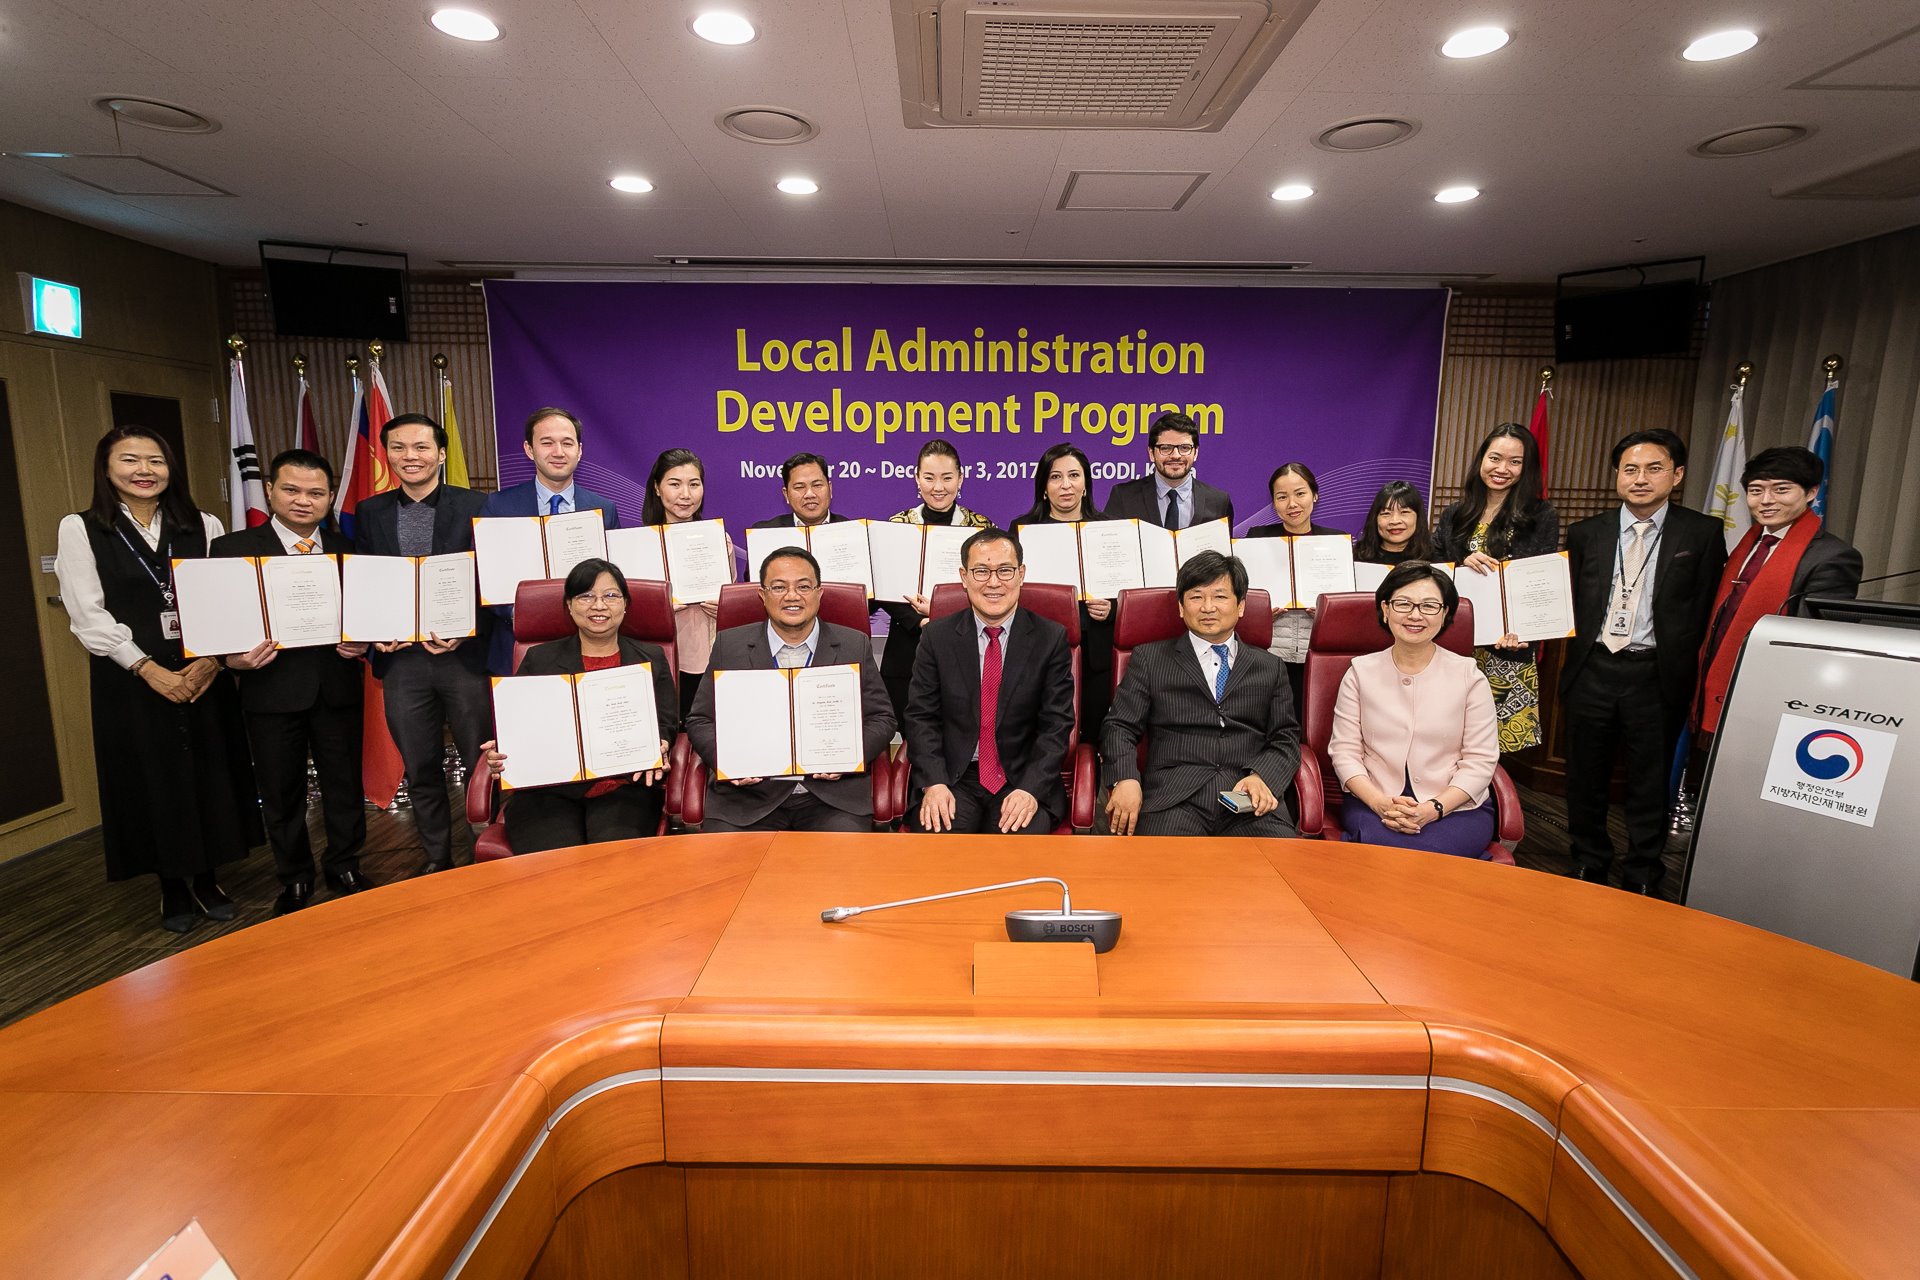 Local administration development program comes to successful close for 2017